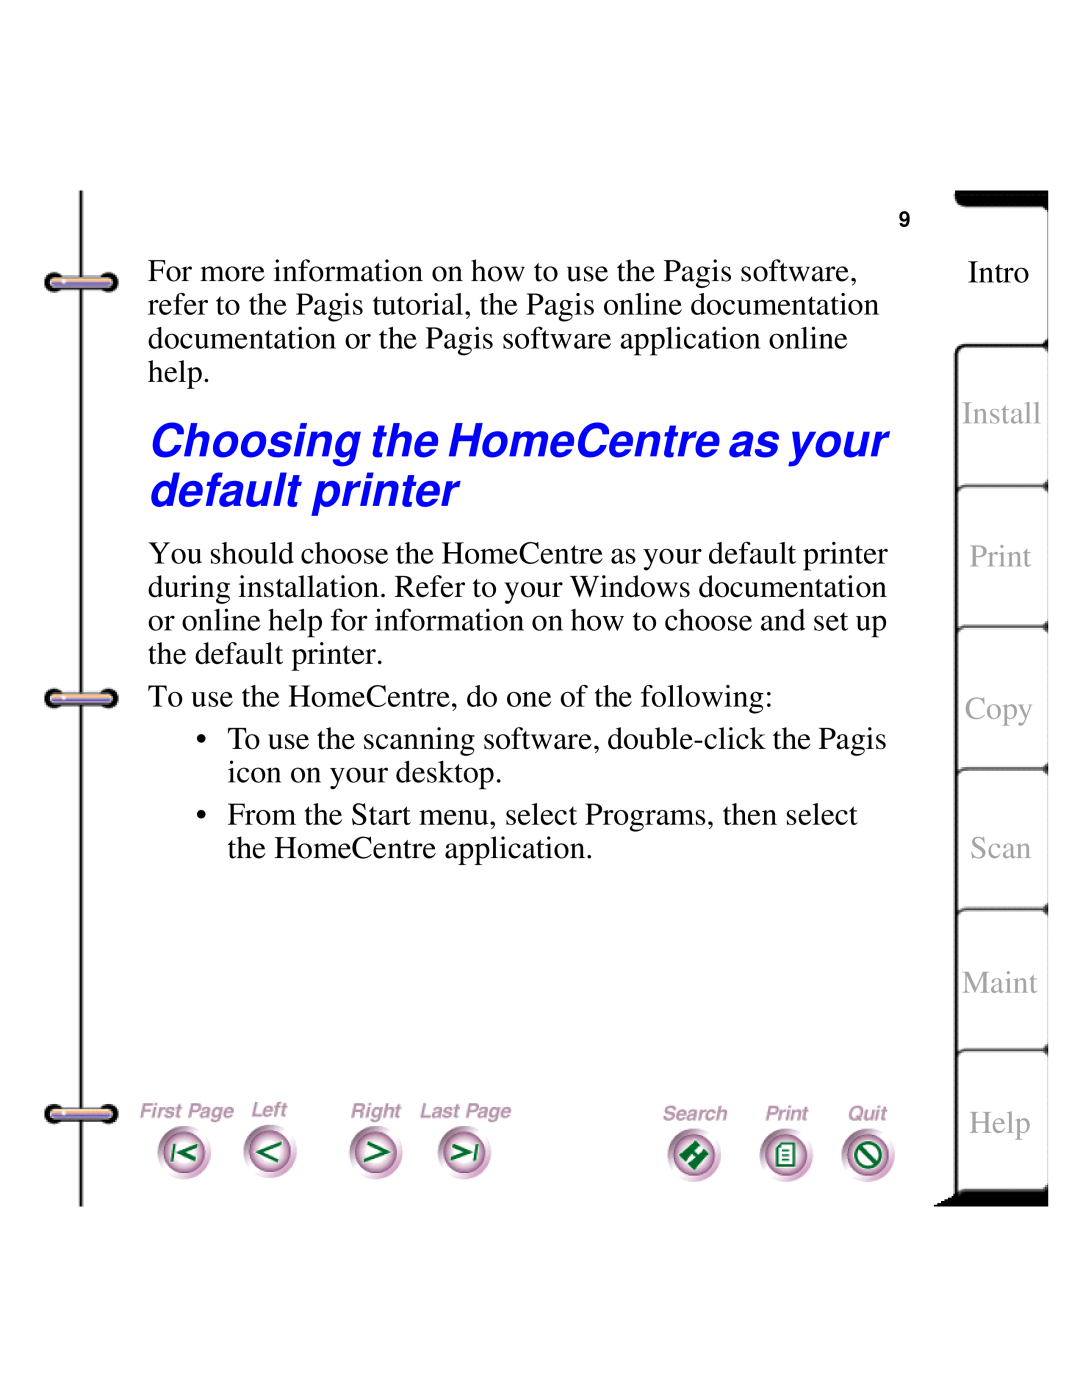 Xerox Document HomeCentre manual Choosing the HomeCentre as your default printer, Install Print Copy Scan Maint, Help 